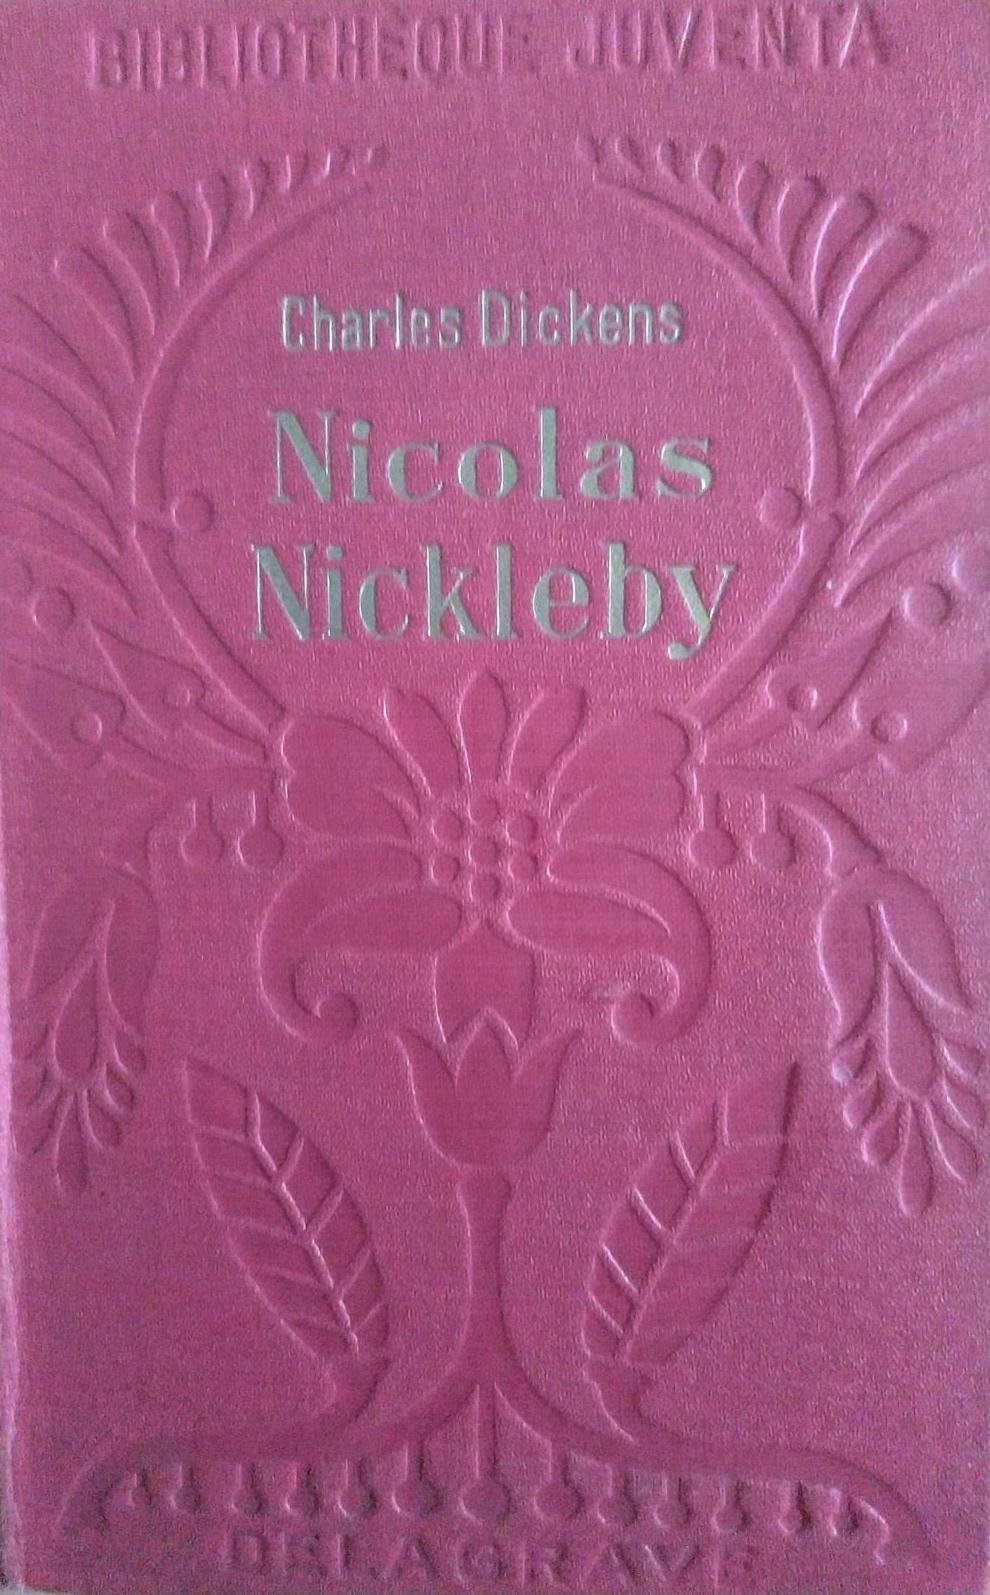 Nicholas Nickleby (French language, 1933, Librairie Ch Delagrave)